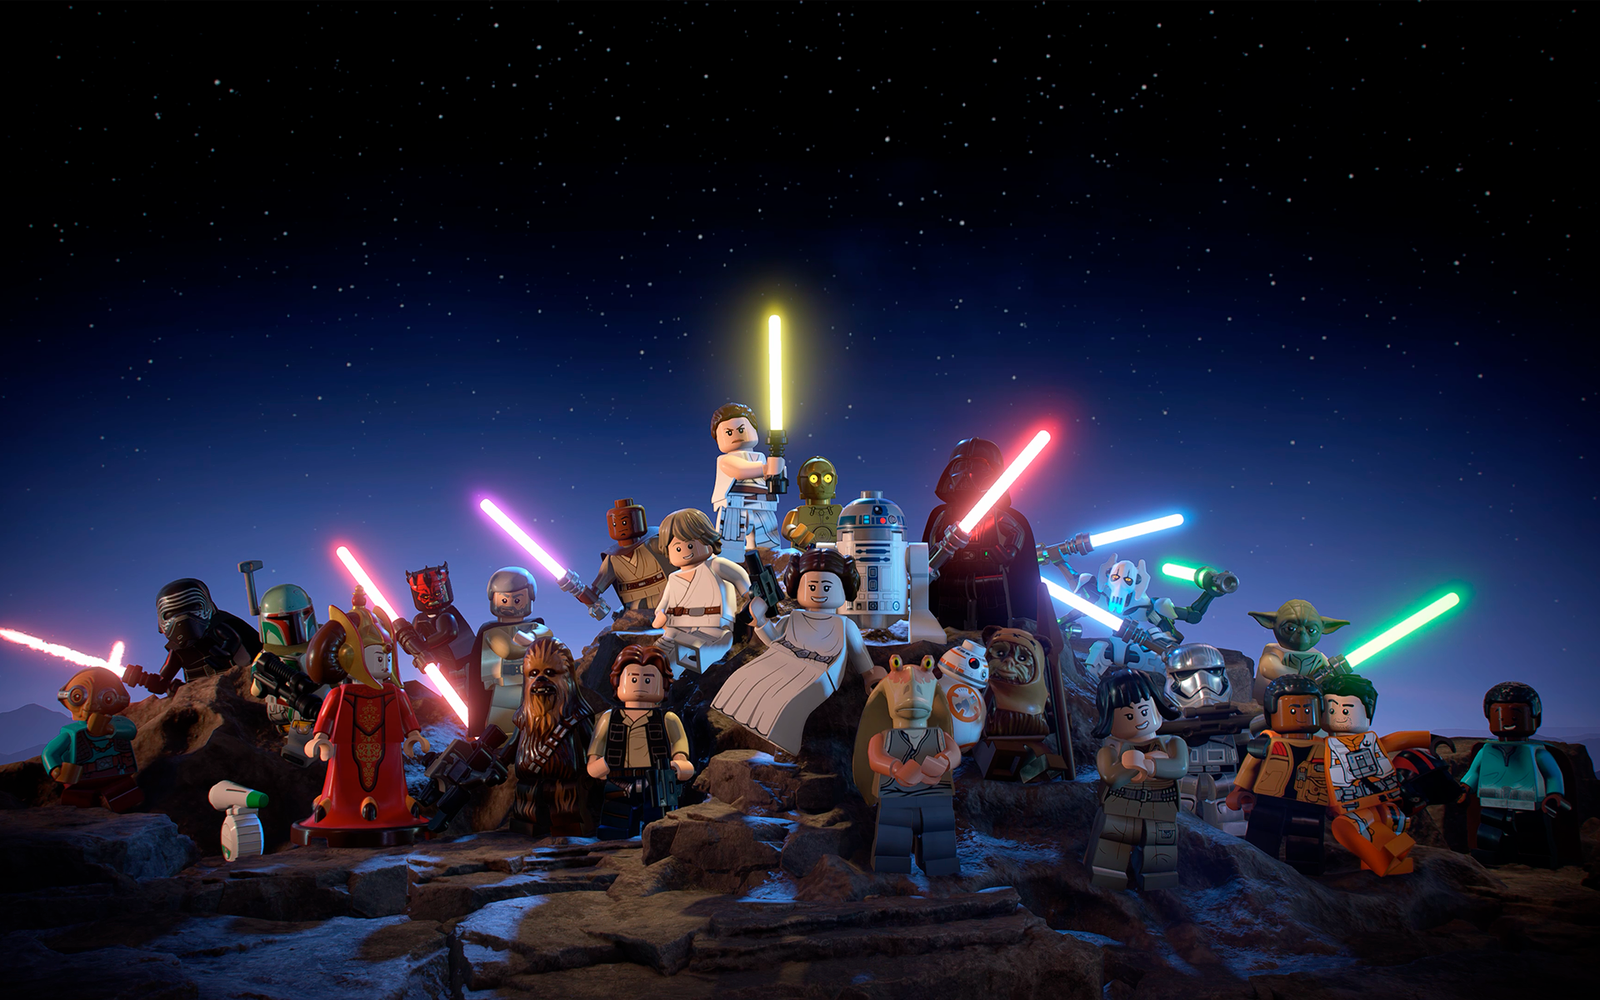 Lego Star Wars The Skywalker Saga free full pc game for Download